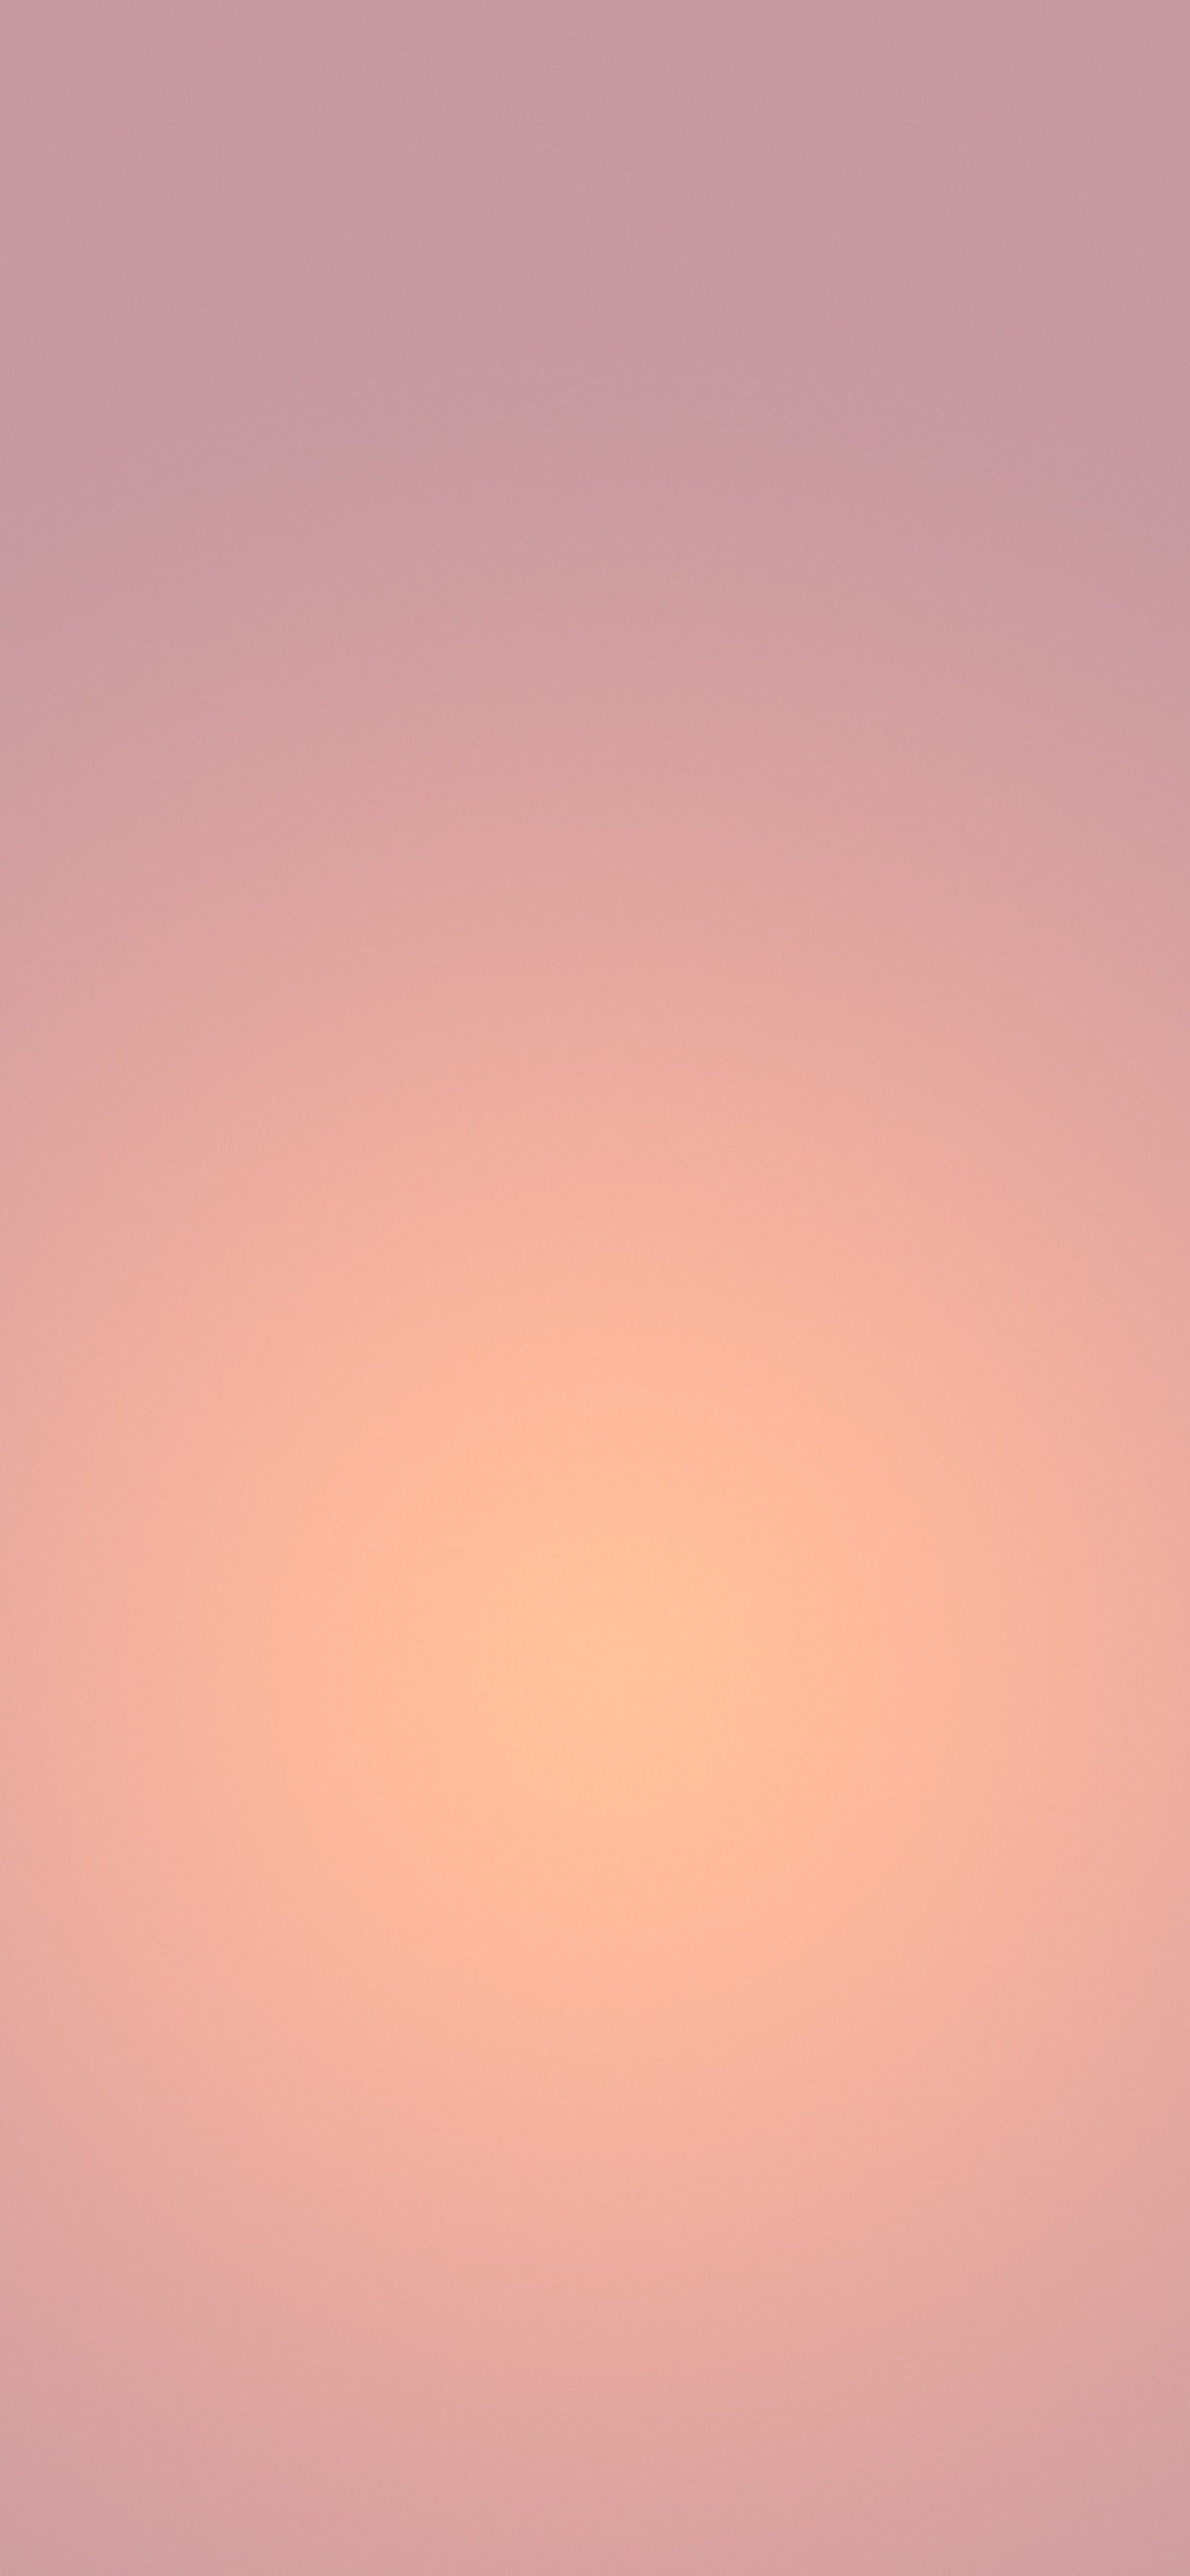 Warm for iPhoneXSMAX-iPhoneXR iphone wallpaper gradient AR72014